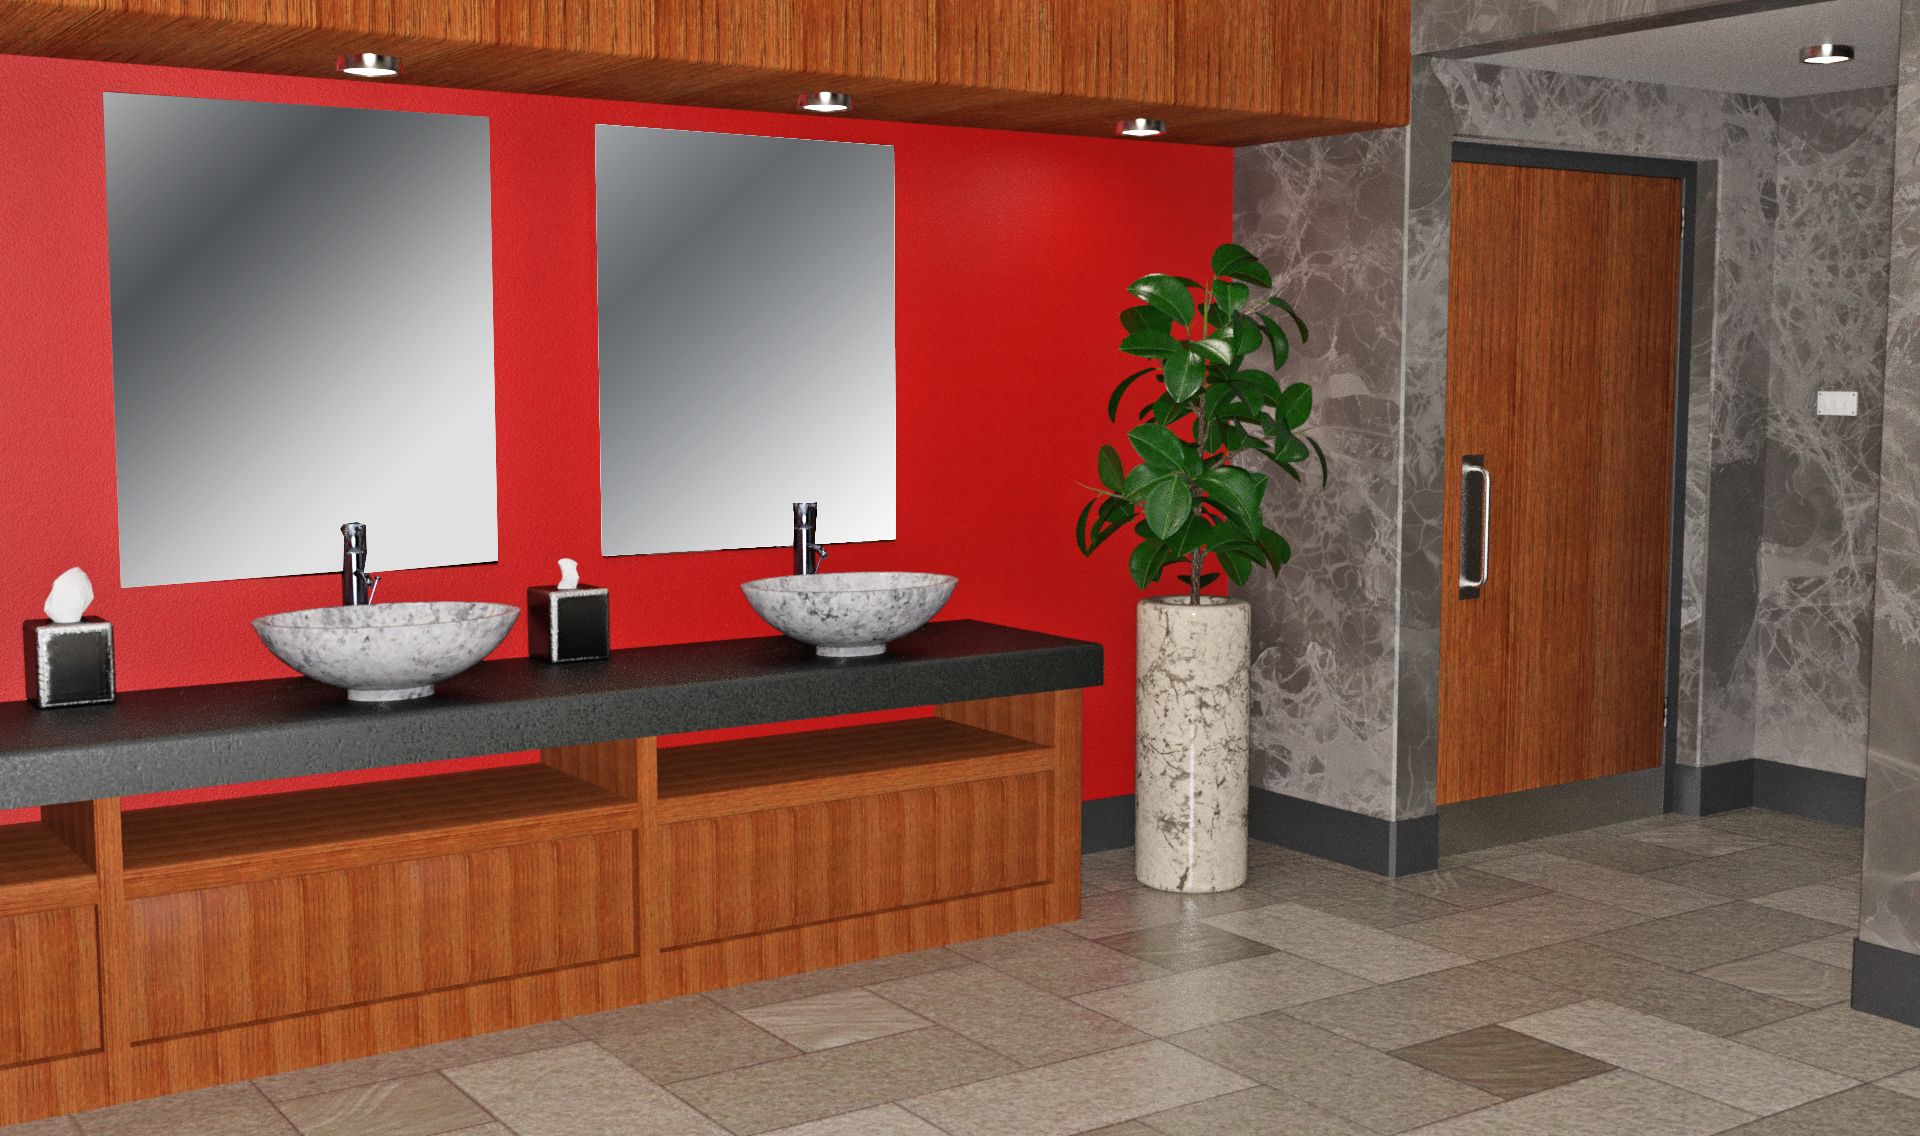 INT. RED PUBLIC BATHROOM 1. Episode interactive background, Public bathrooms, Episode background bathroom